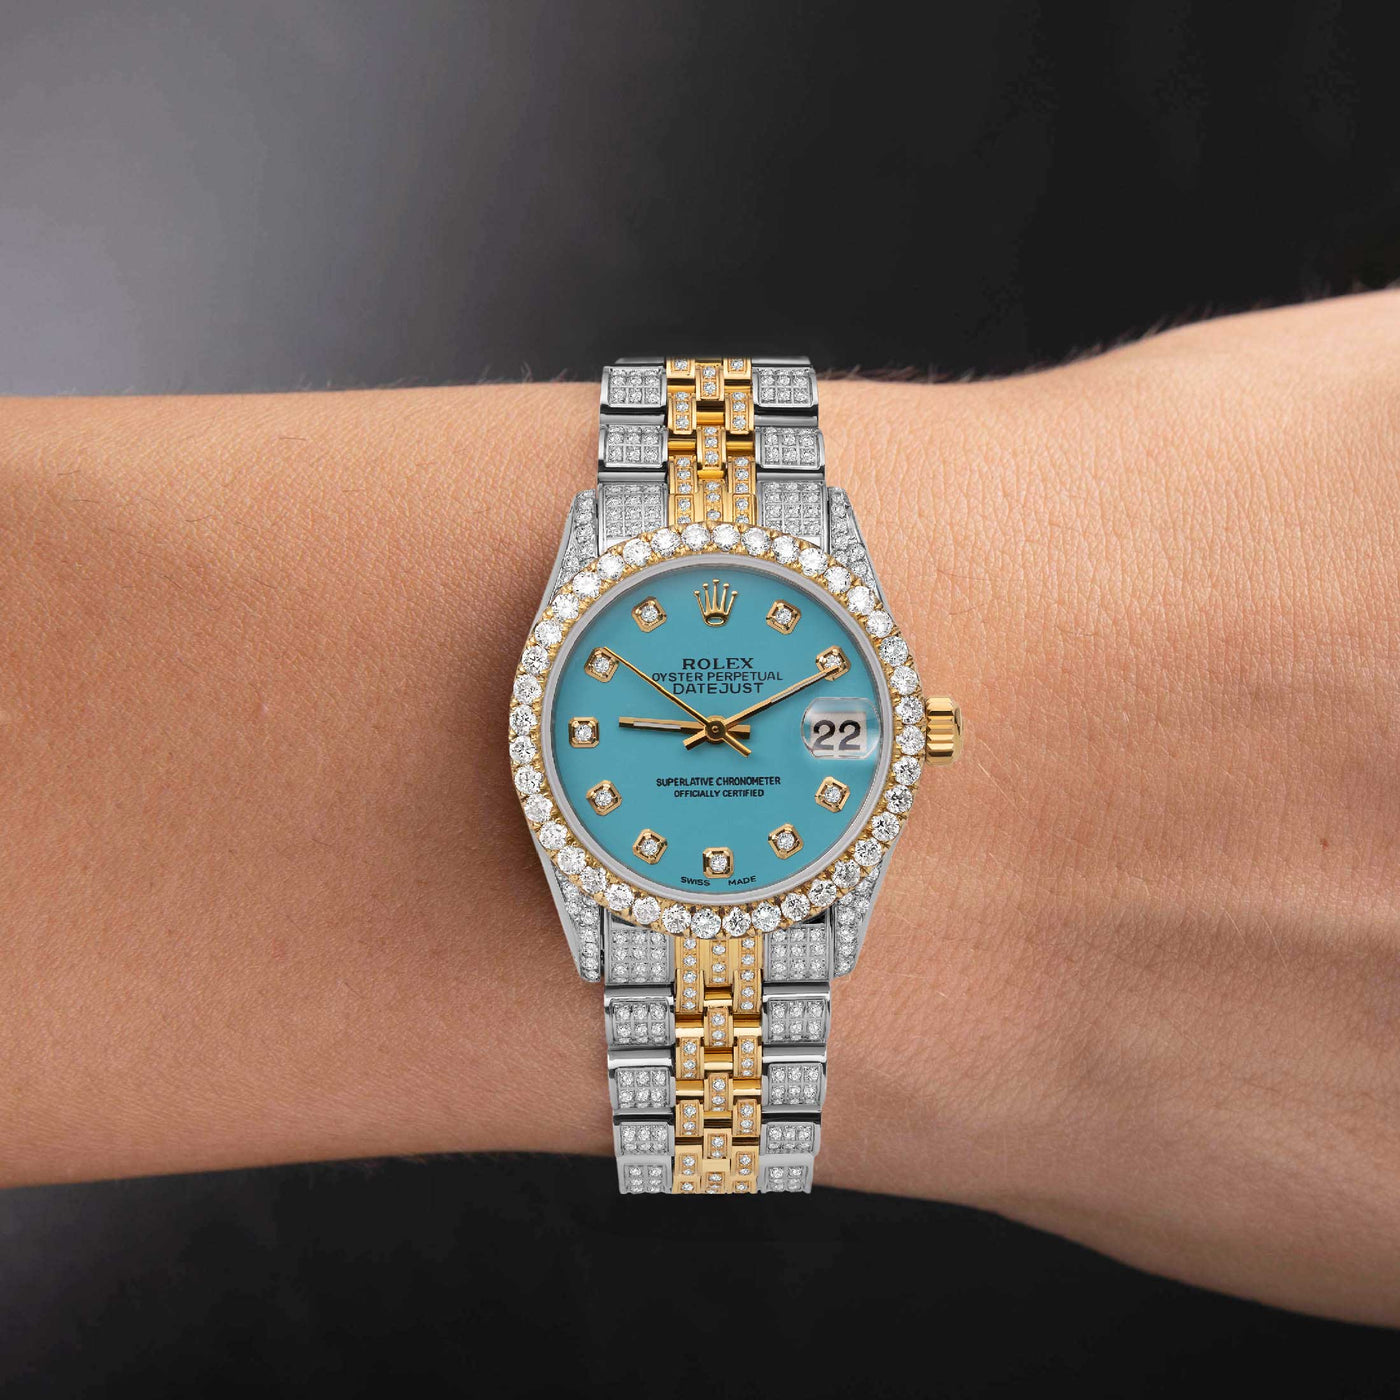 Rolex Datejust Diamond Bezel Watch 31mm Turquoise Dial | 6.75ct